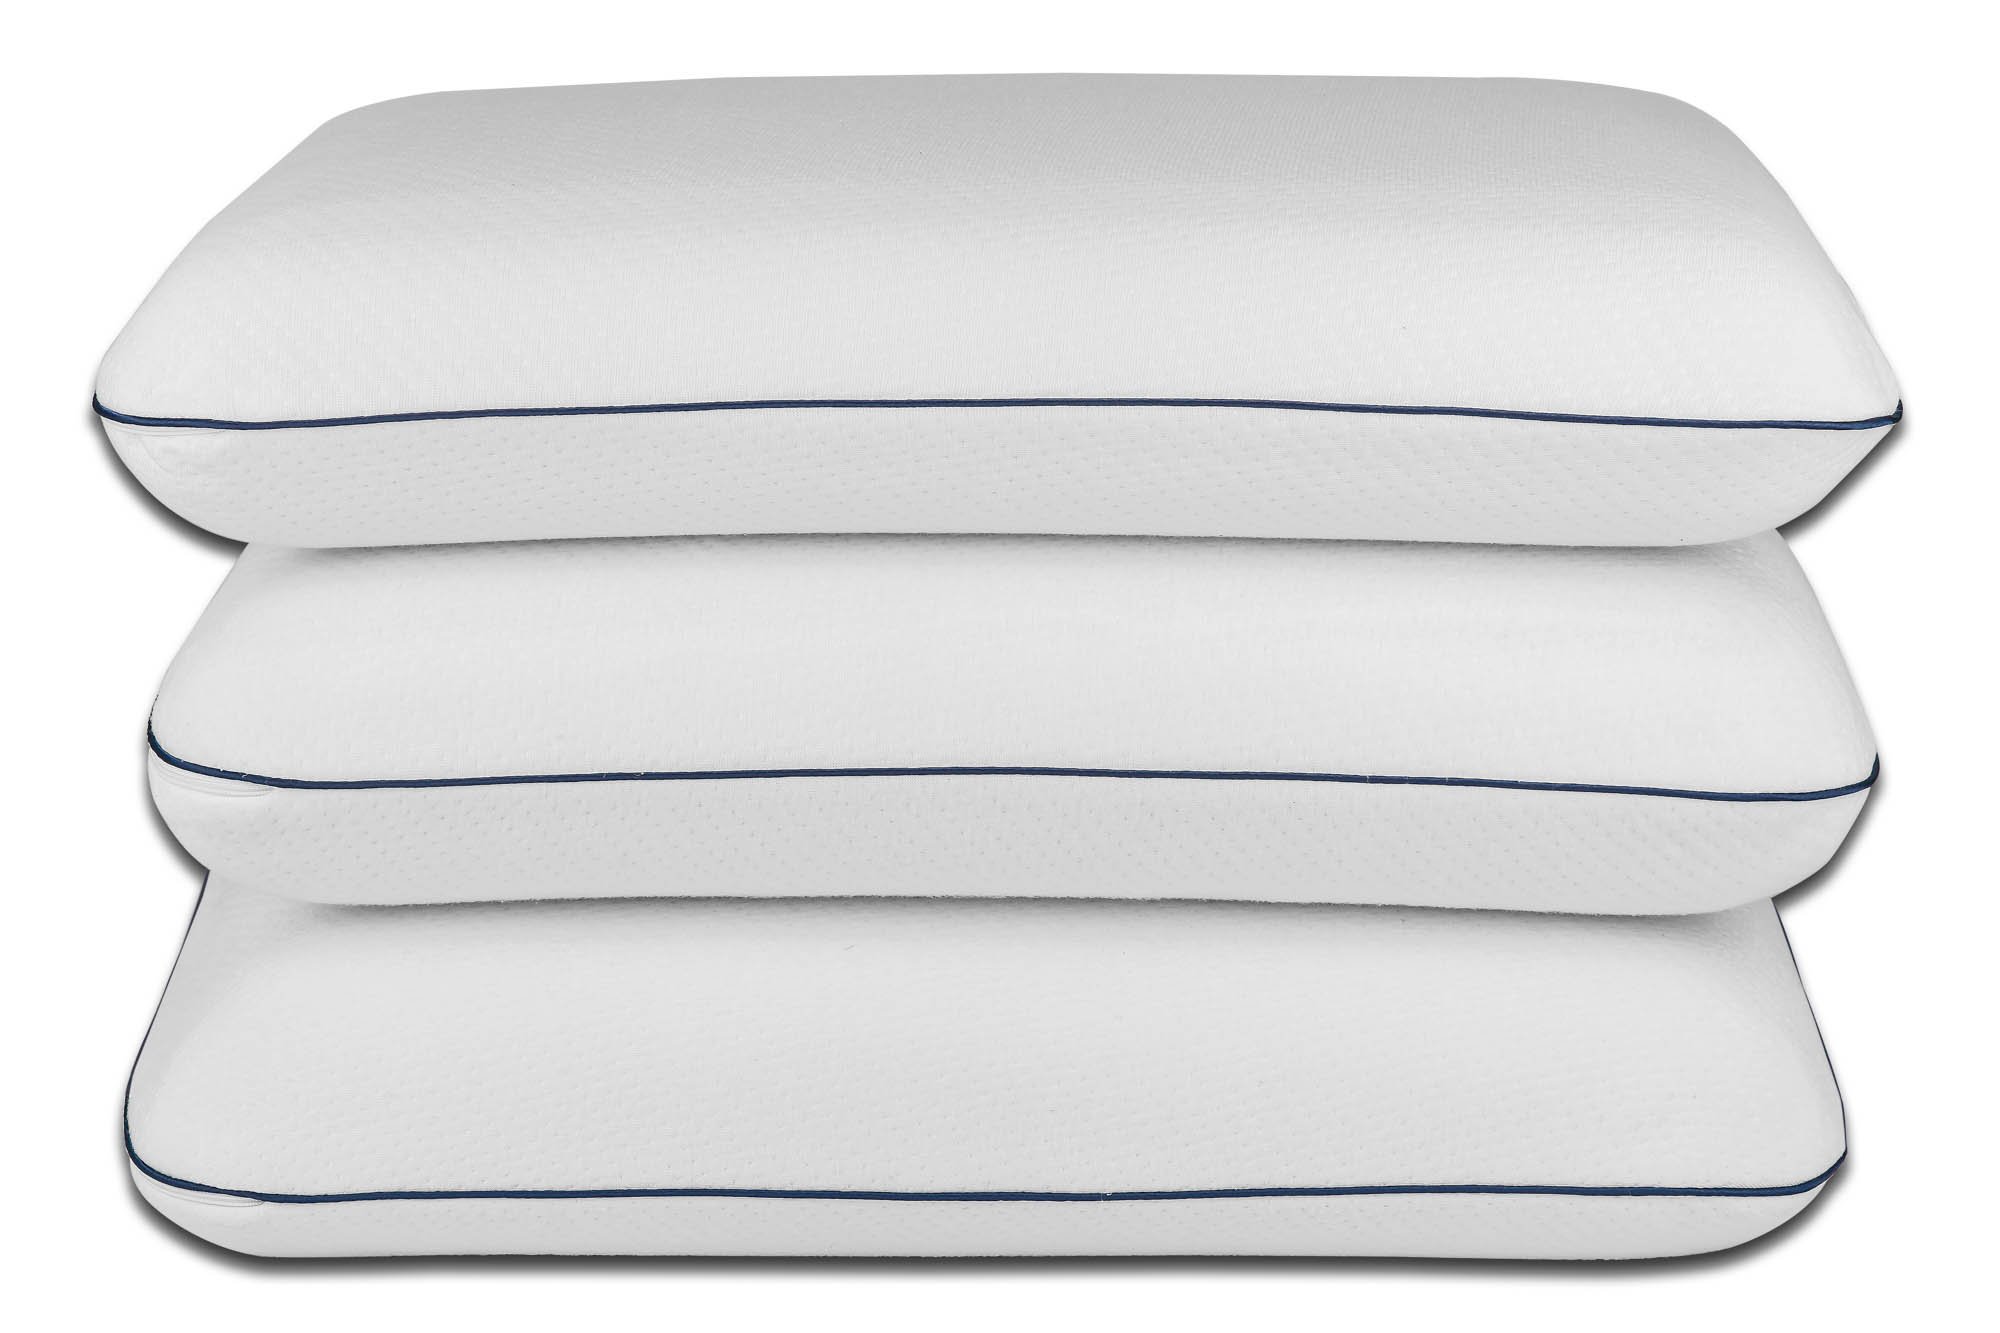 Skyler Pillows stacked